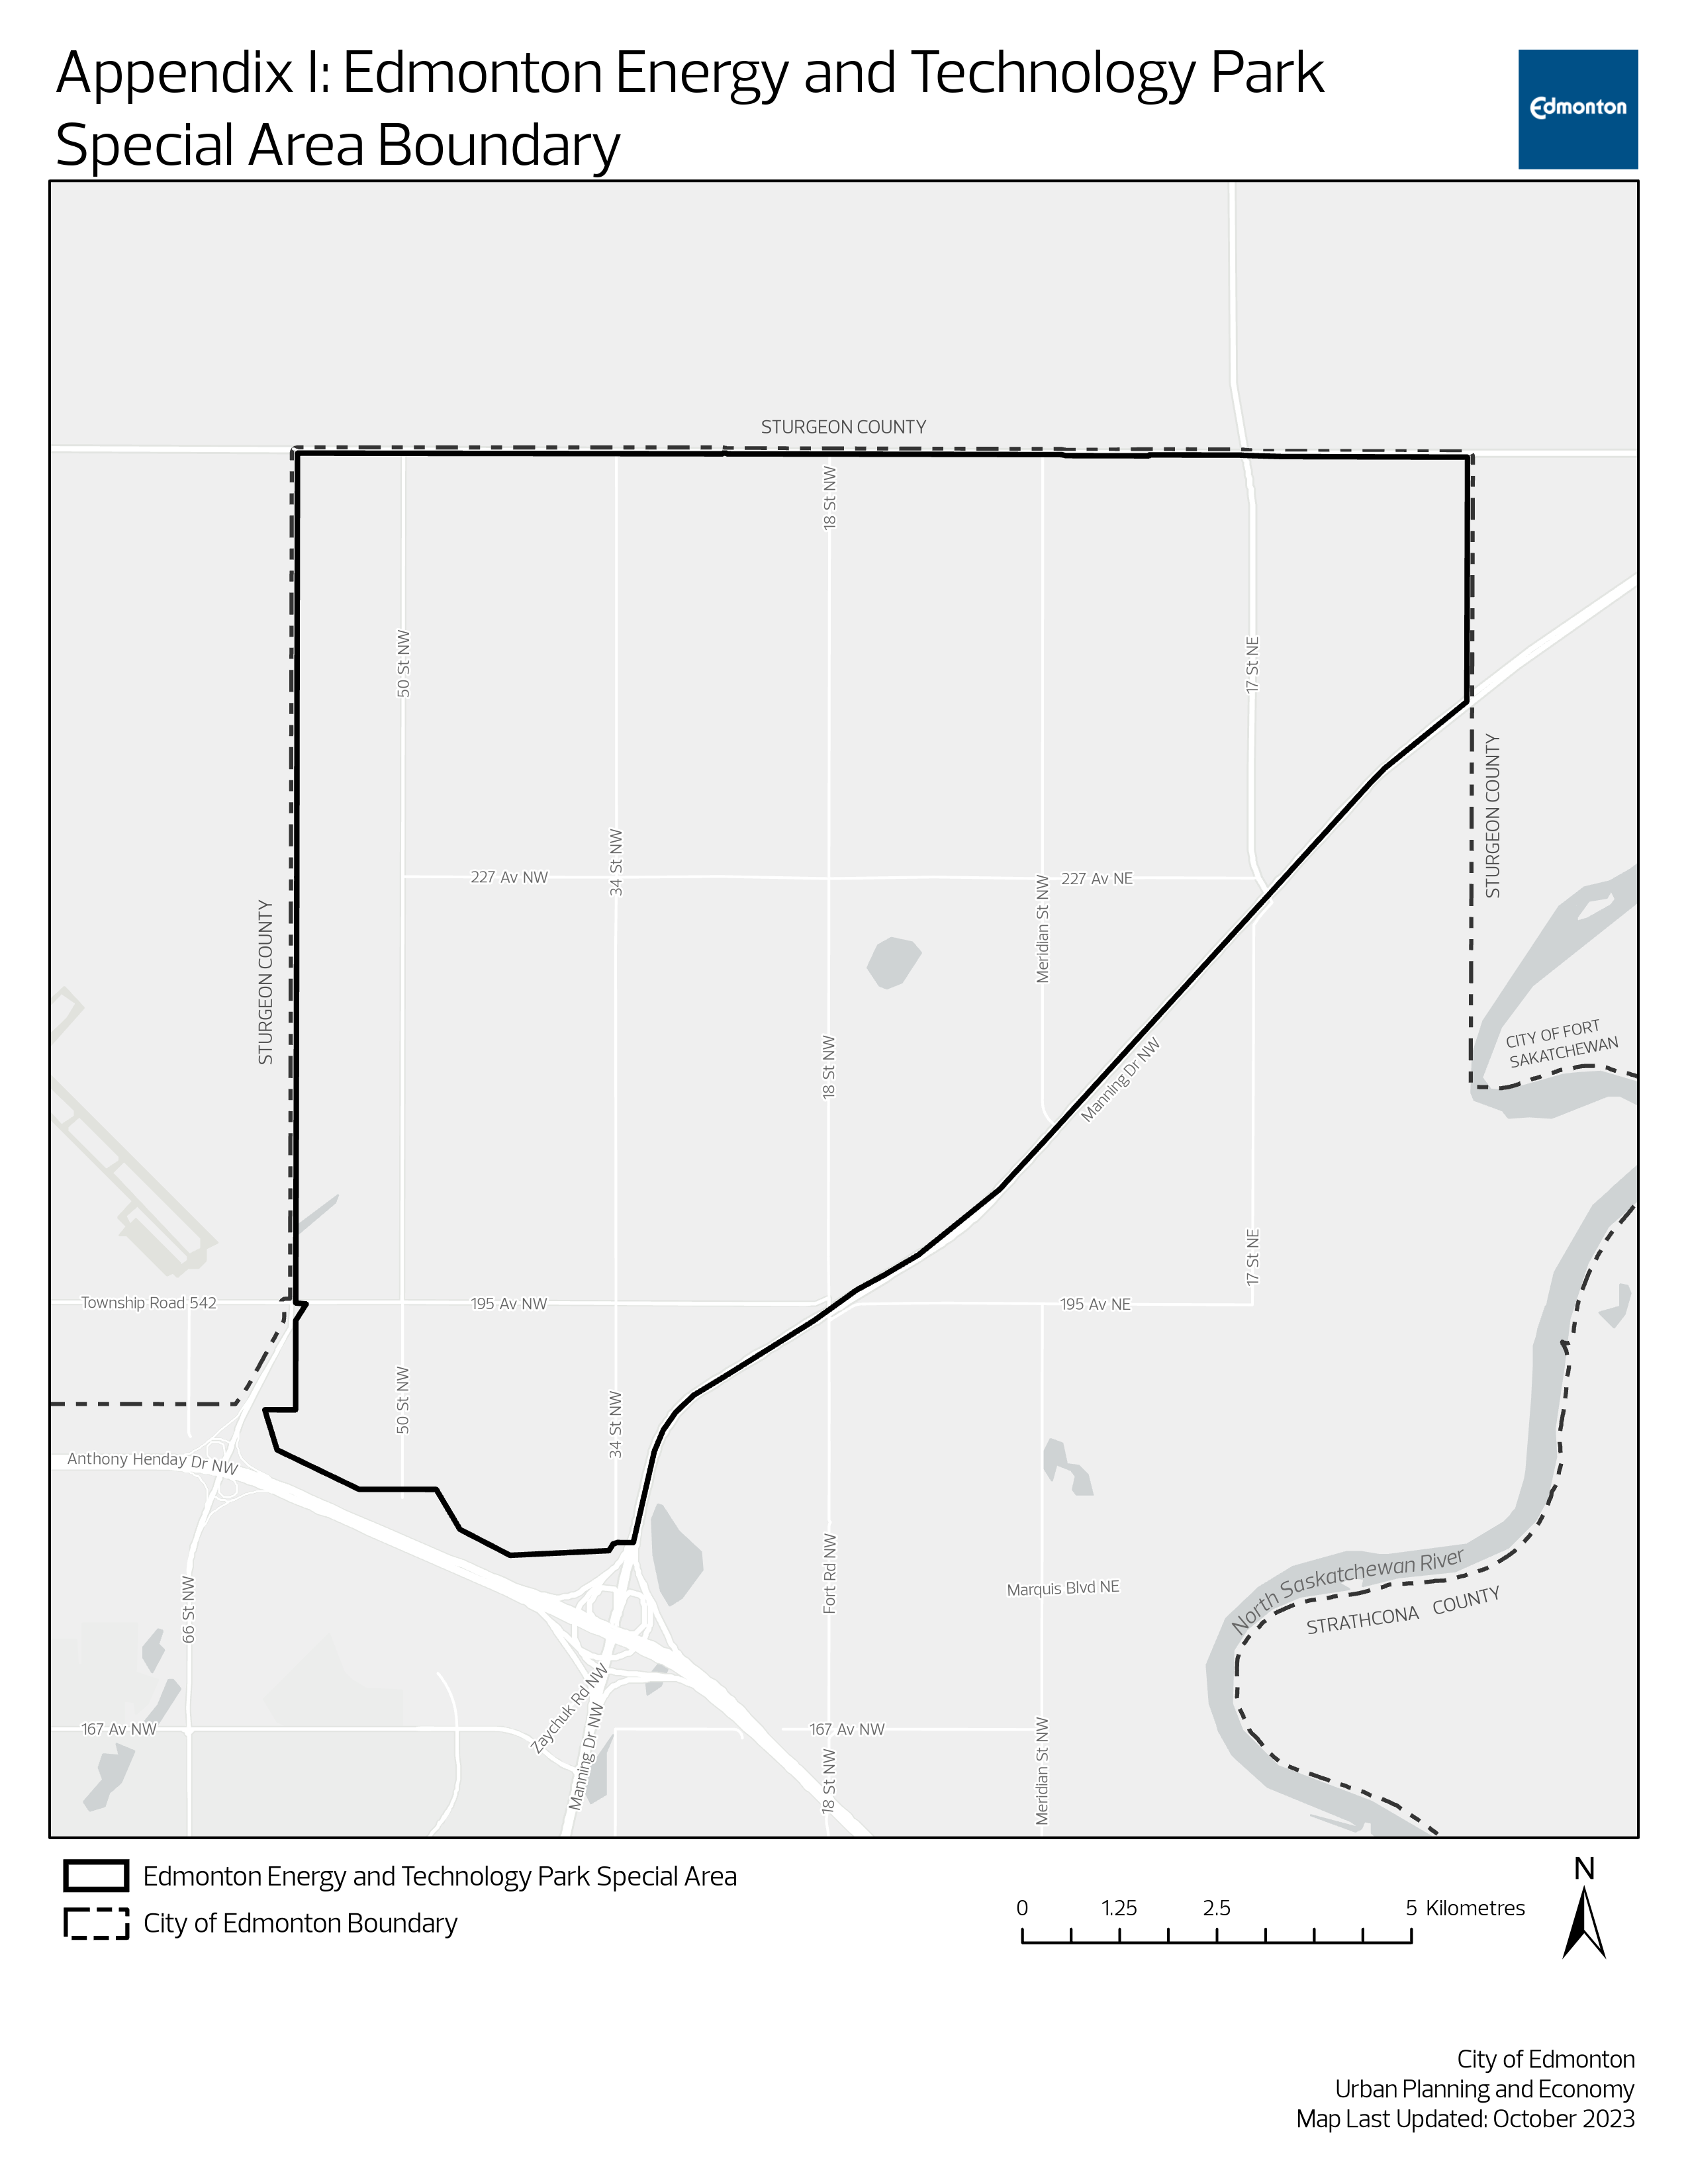 Edmonton Energy and Technology Park Special Area boundary map